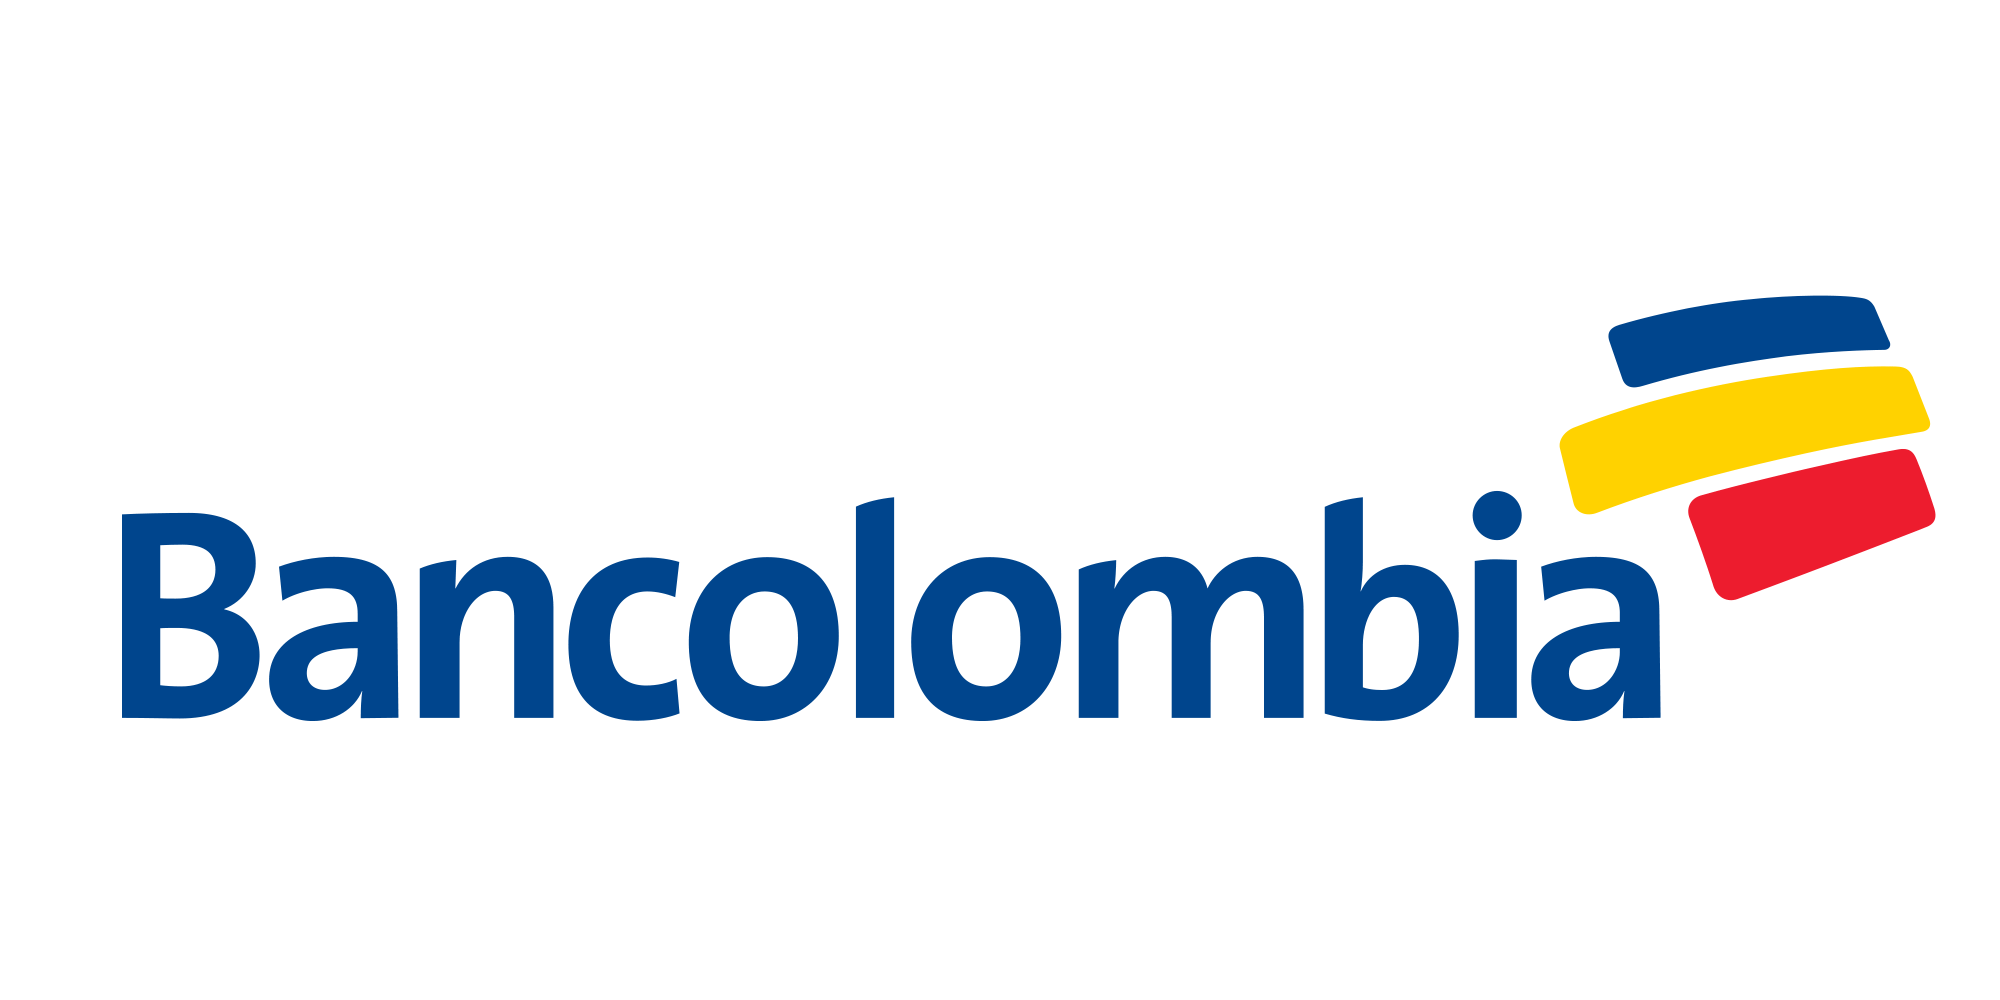 logo-bancolombia